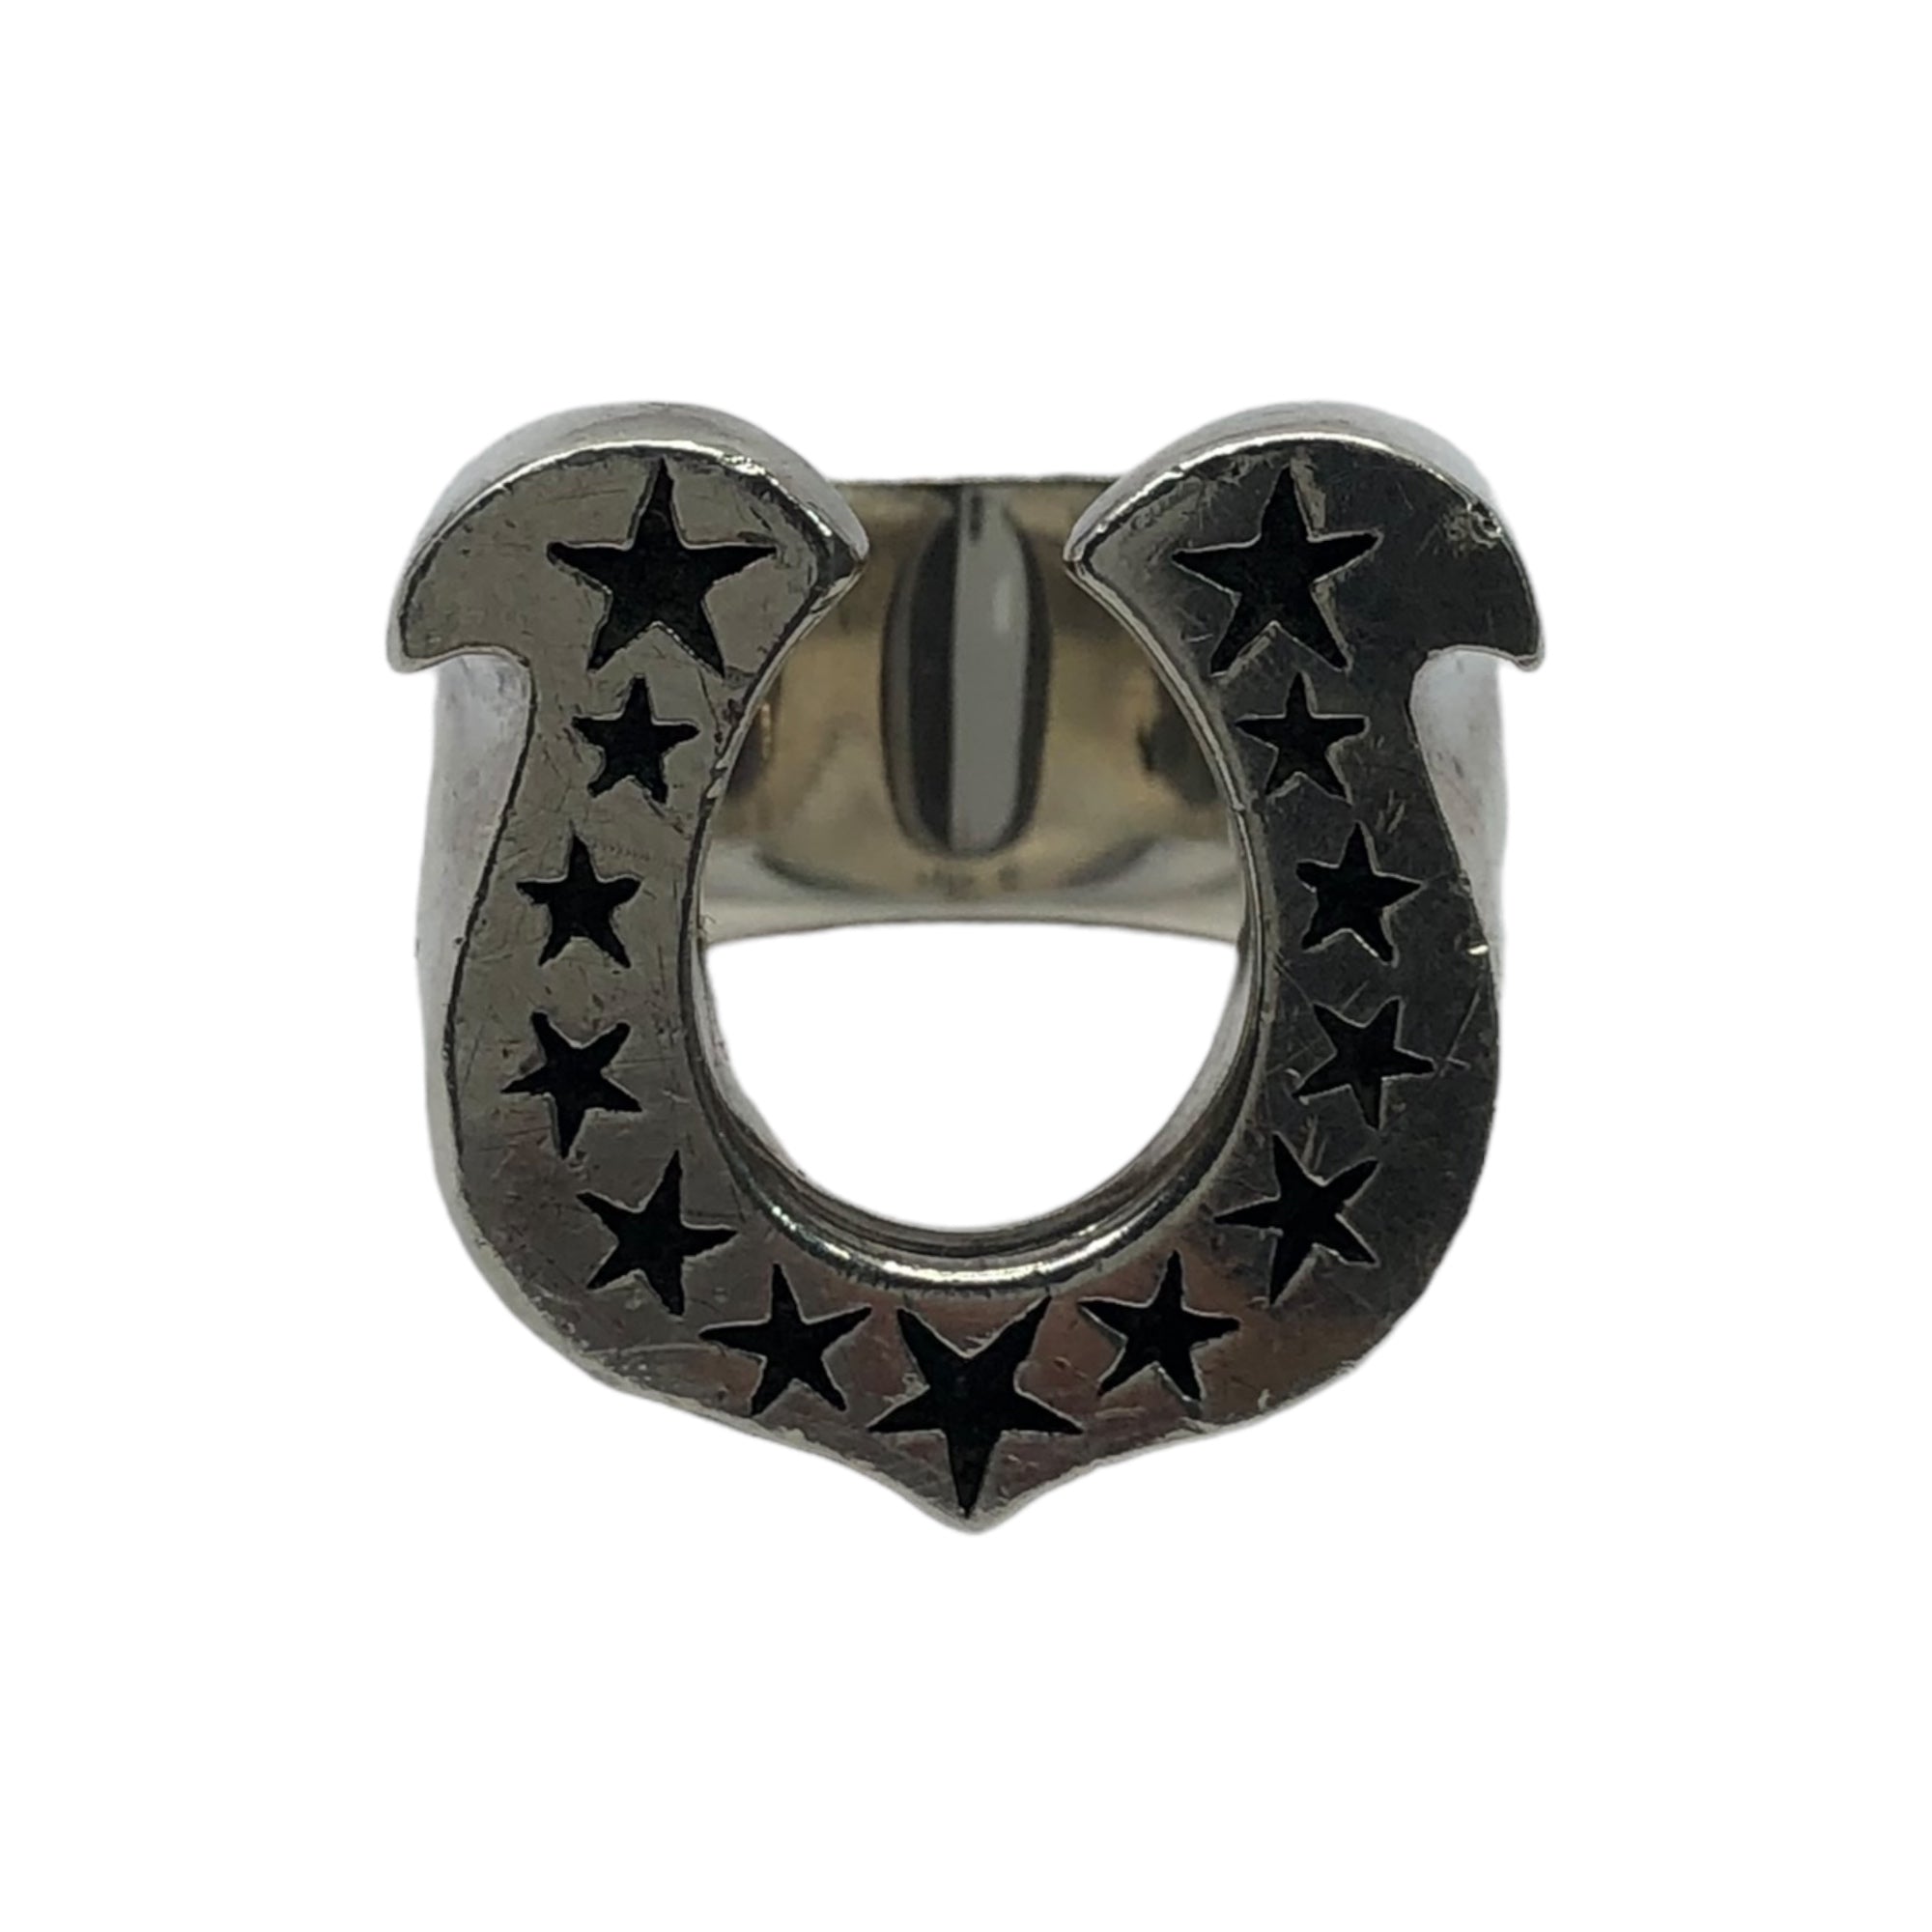 TENDERLOIN(テンダーロイン) horseshoe ring ホースシュー リング silver925 13号